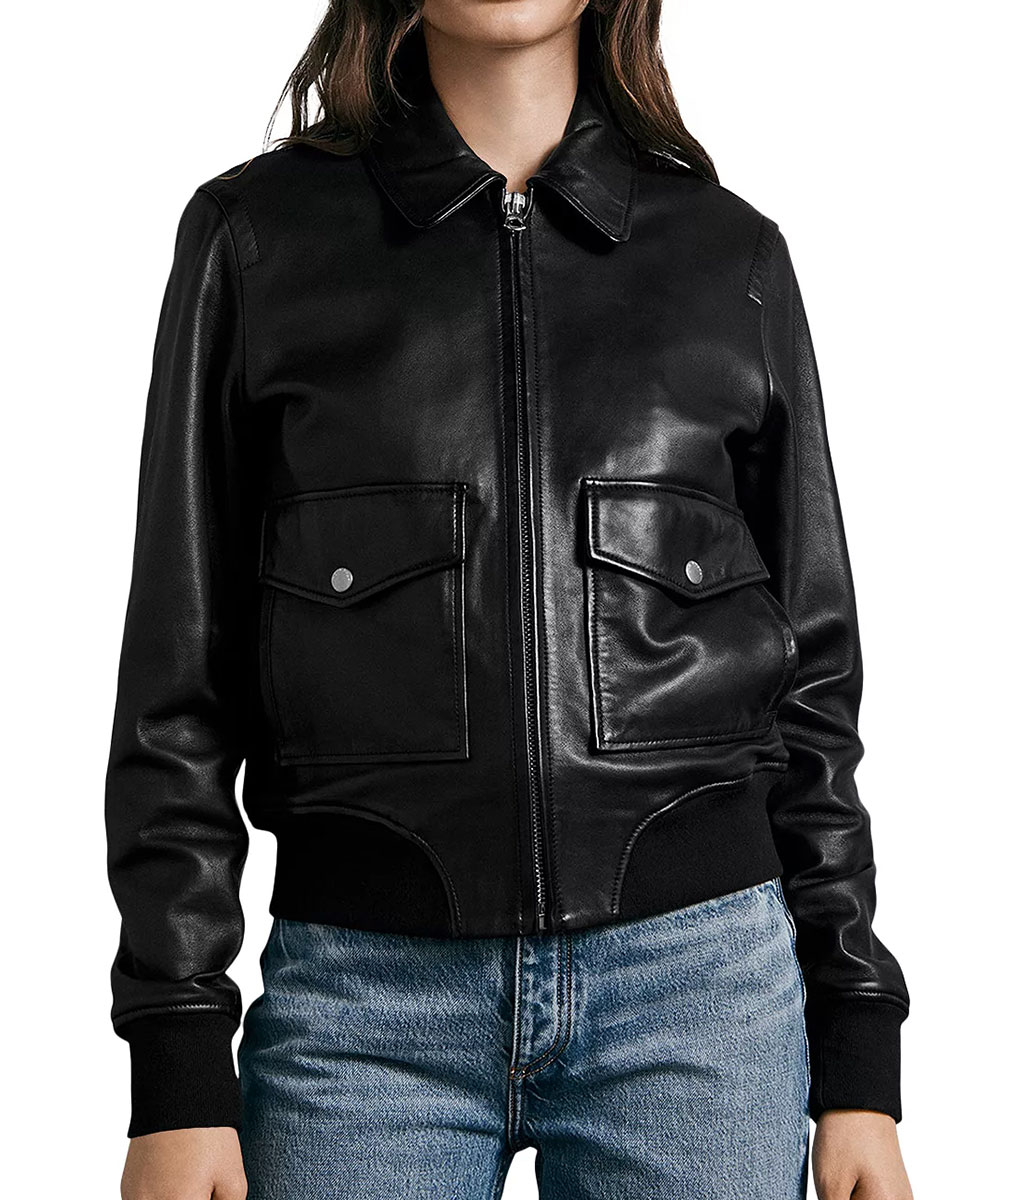 Jennifer Connelly Dark Matter Leather Jacket (1)